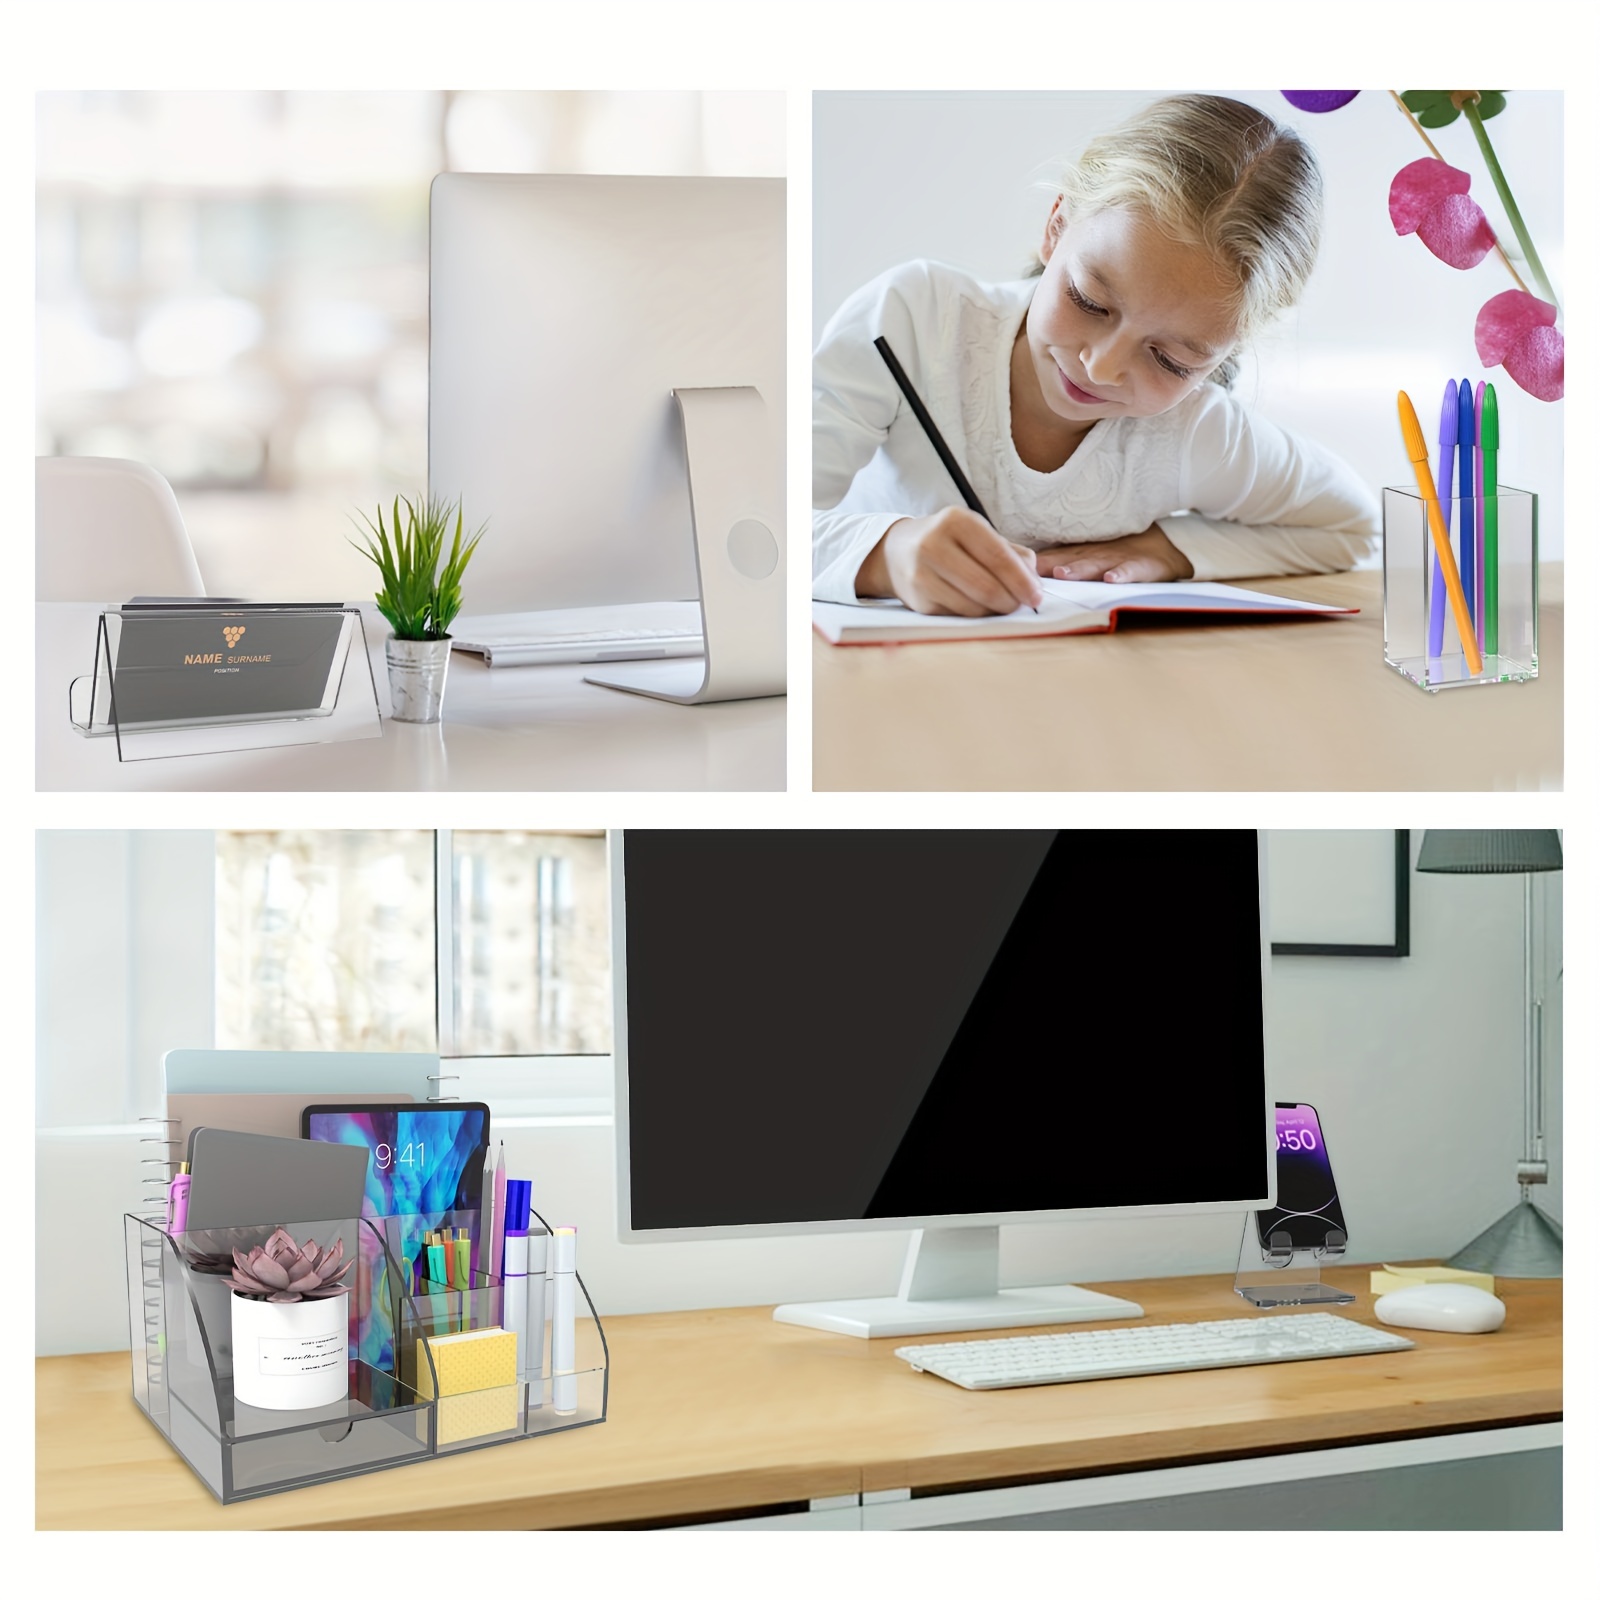 Acrylic Desk Organizer Office Accessories With Desk Organizer, Pen